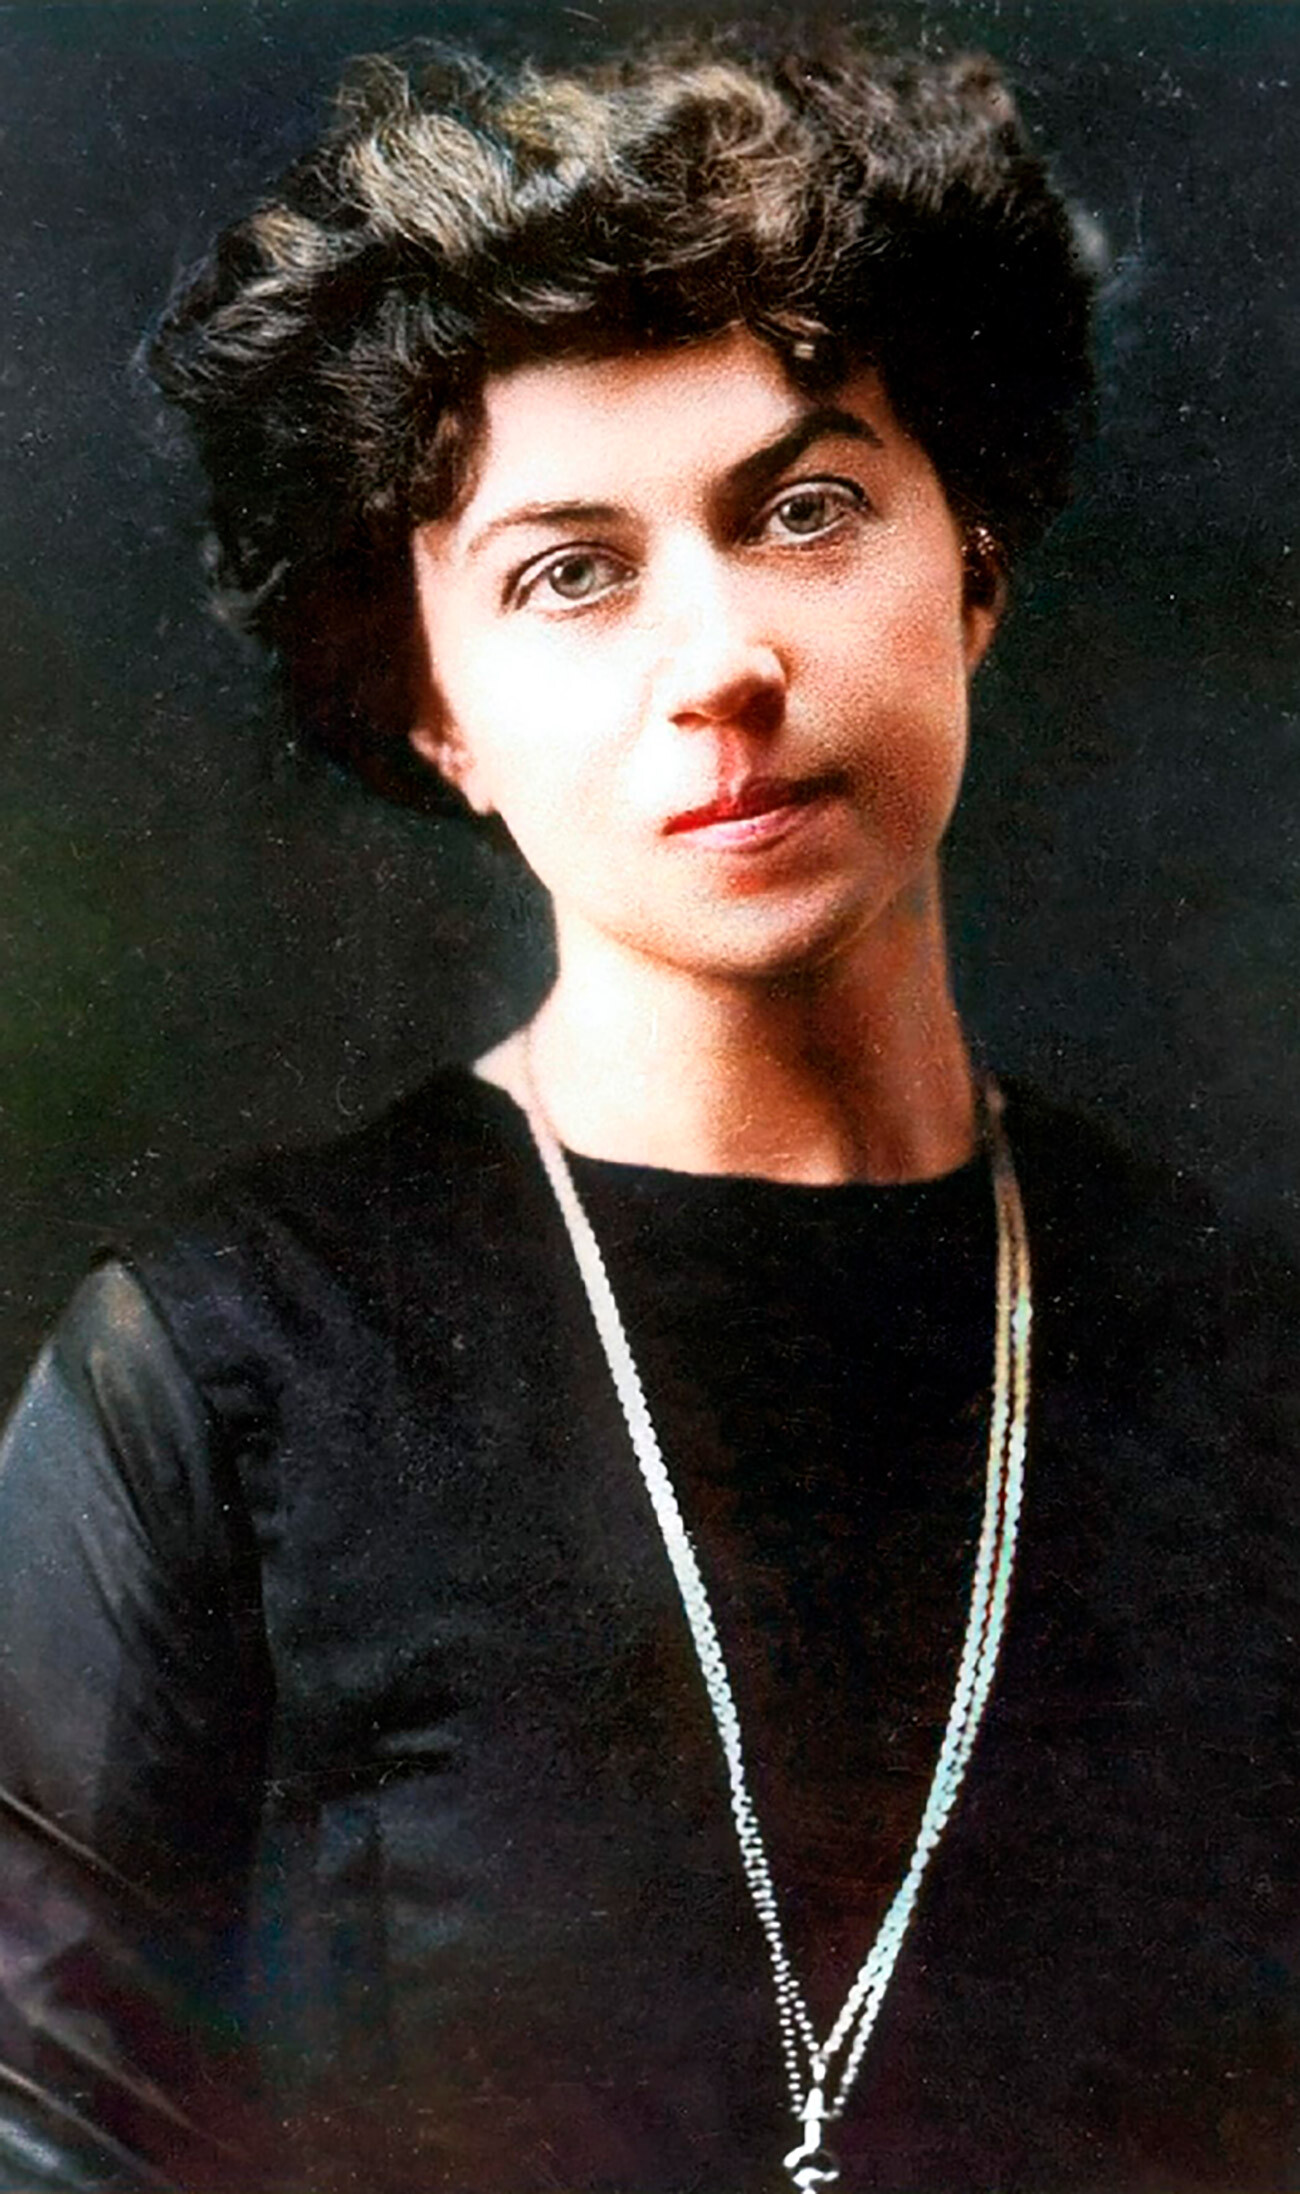 Alexandra Kollontai, 1910